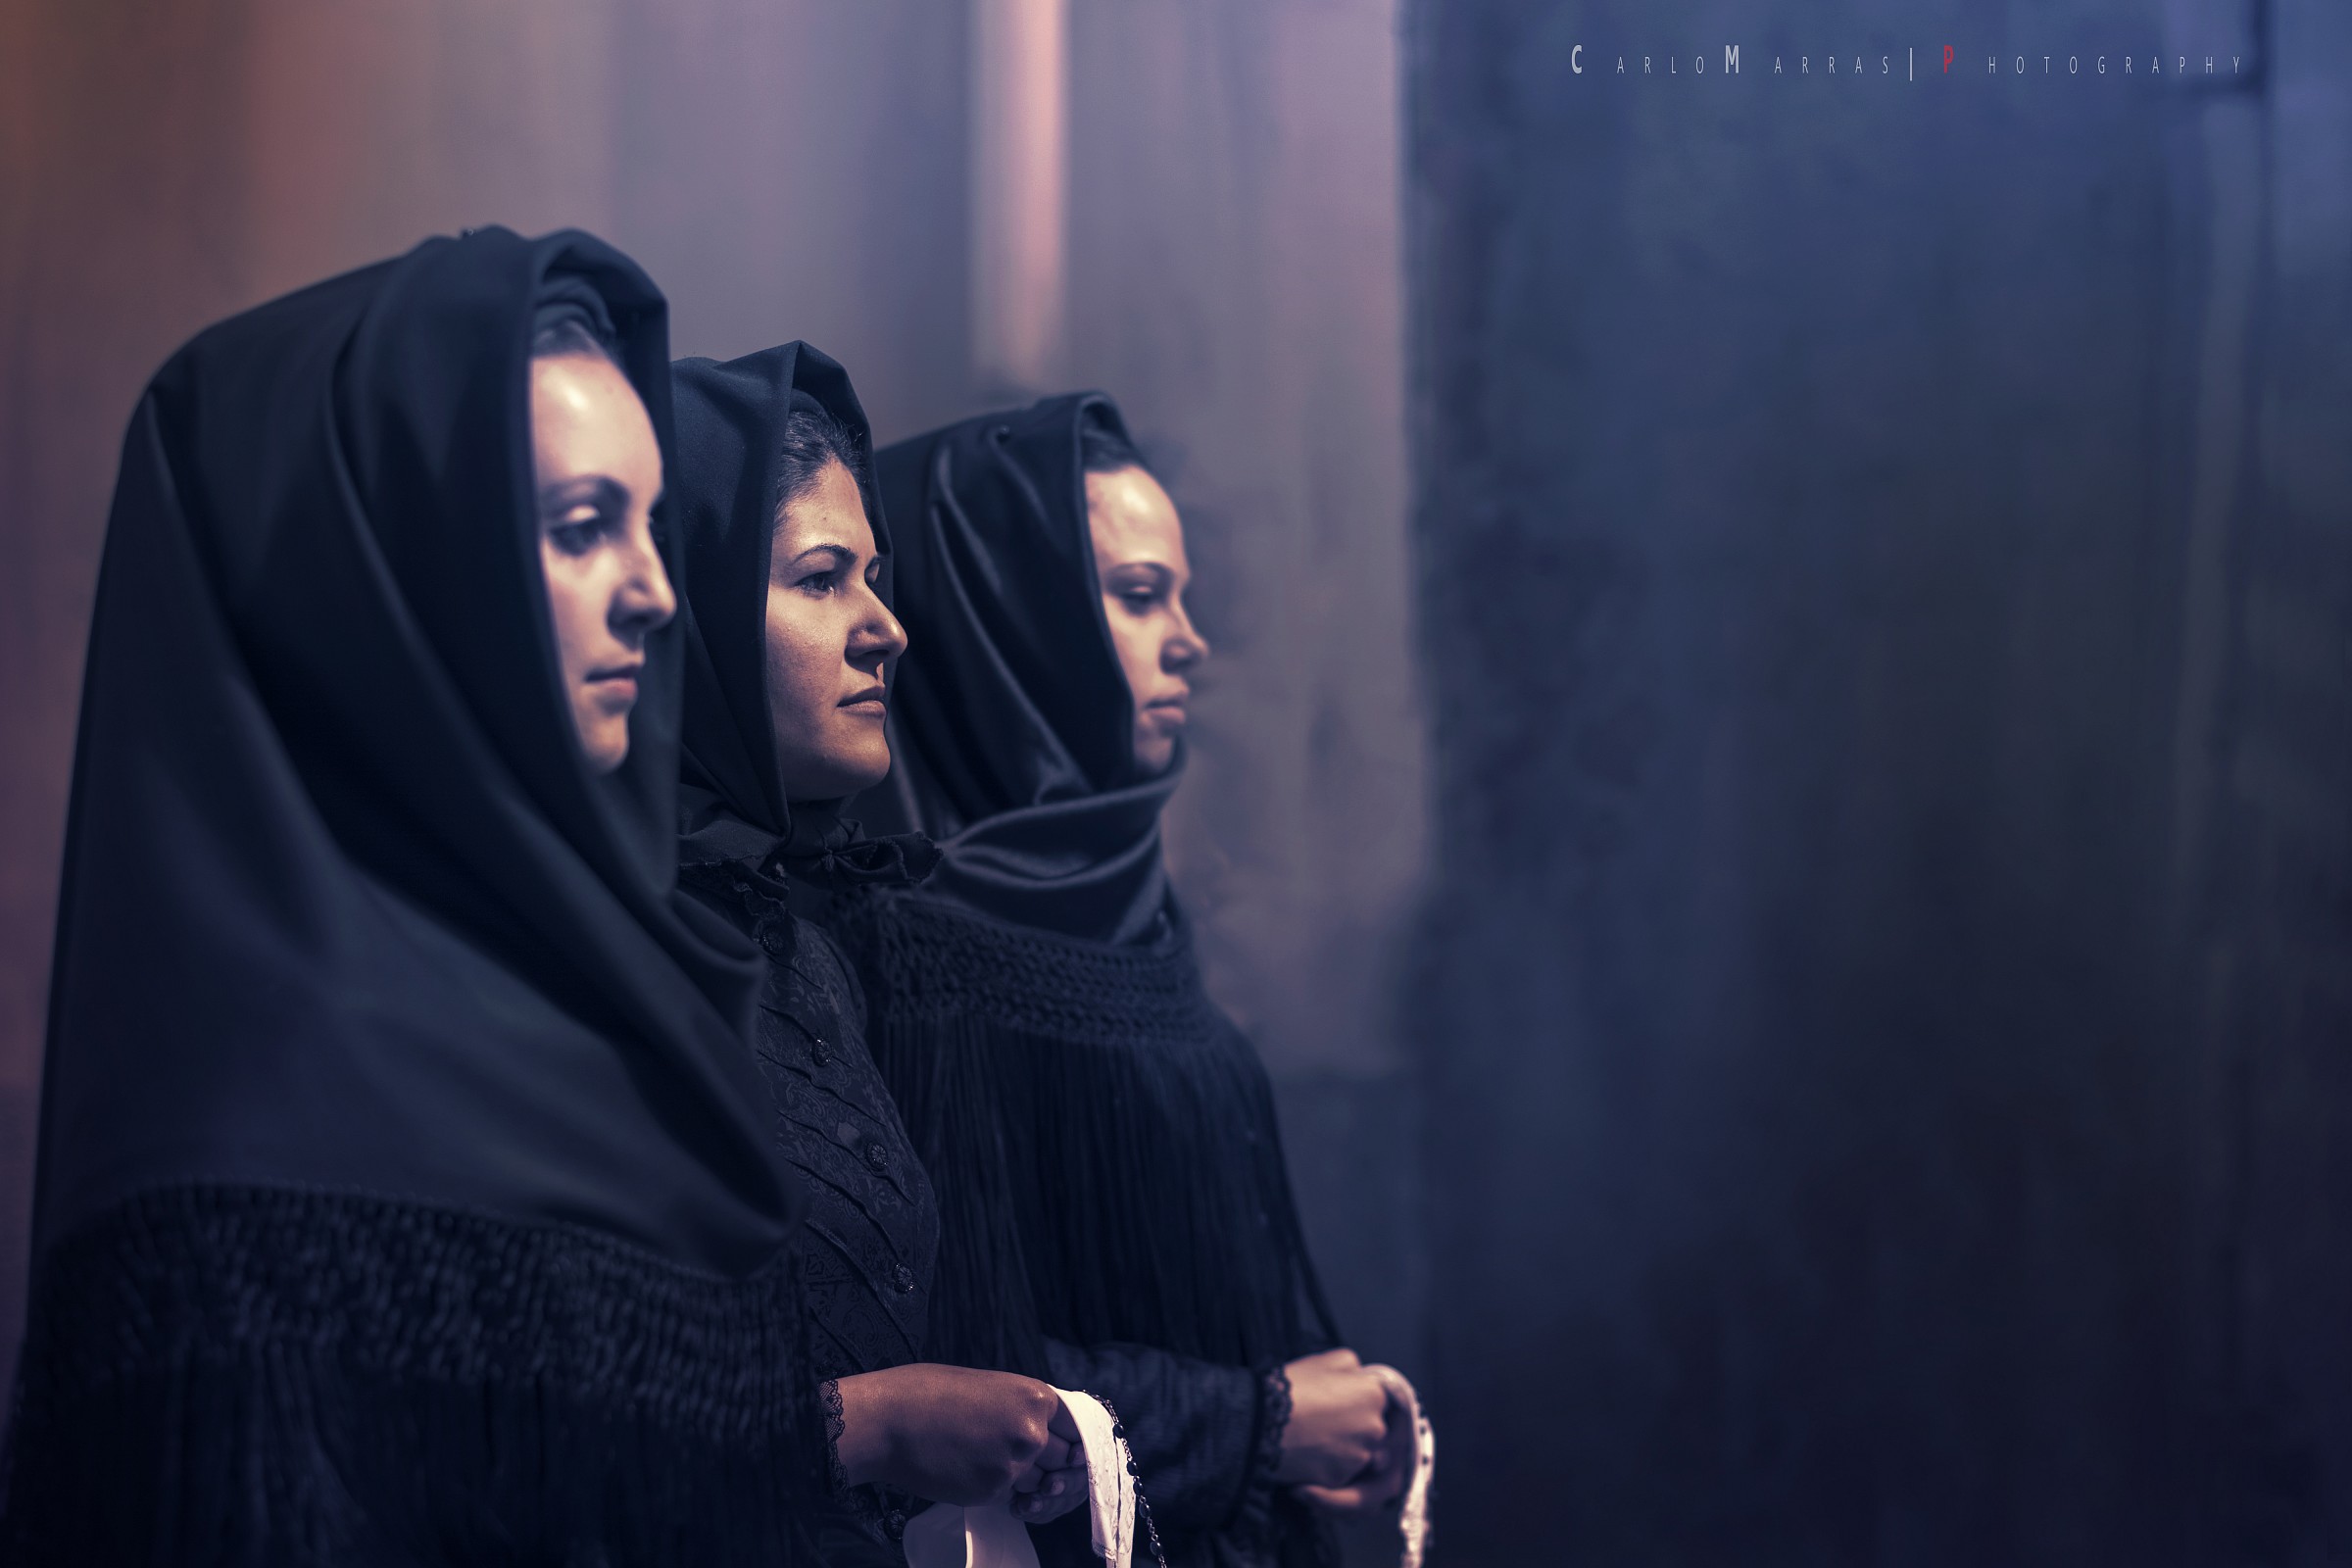 the three widows...